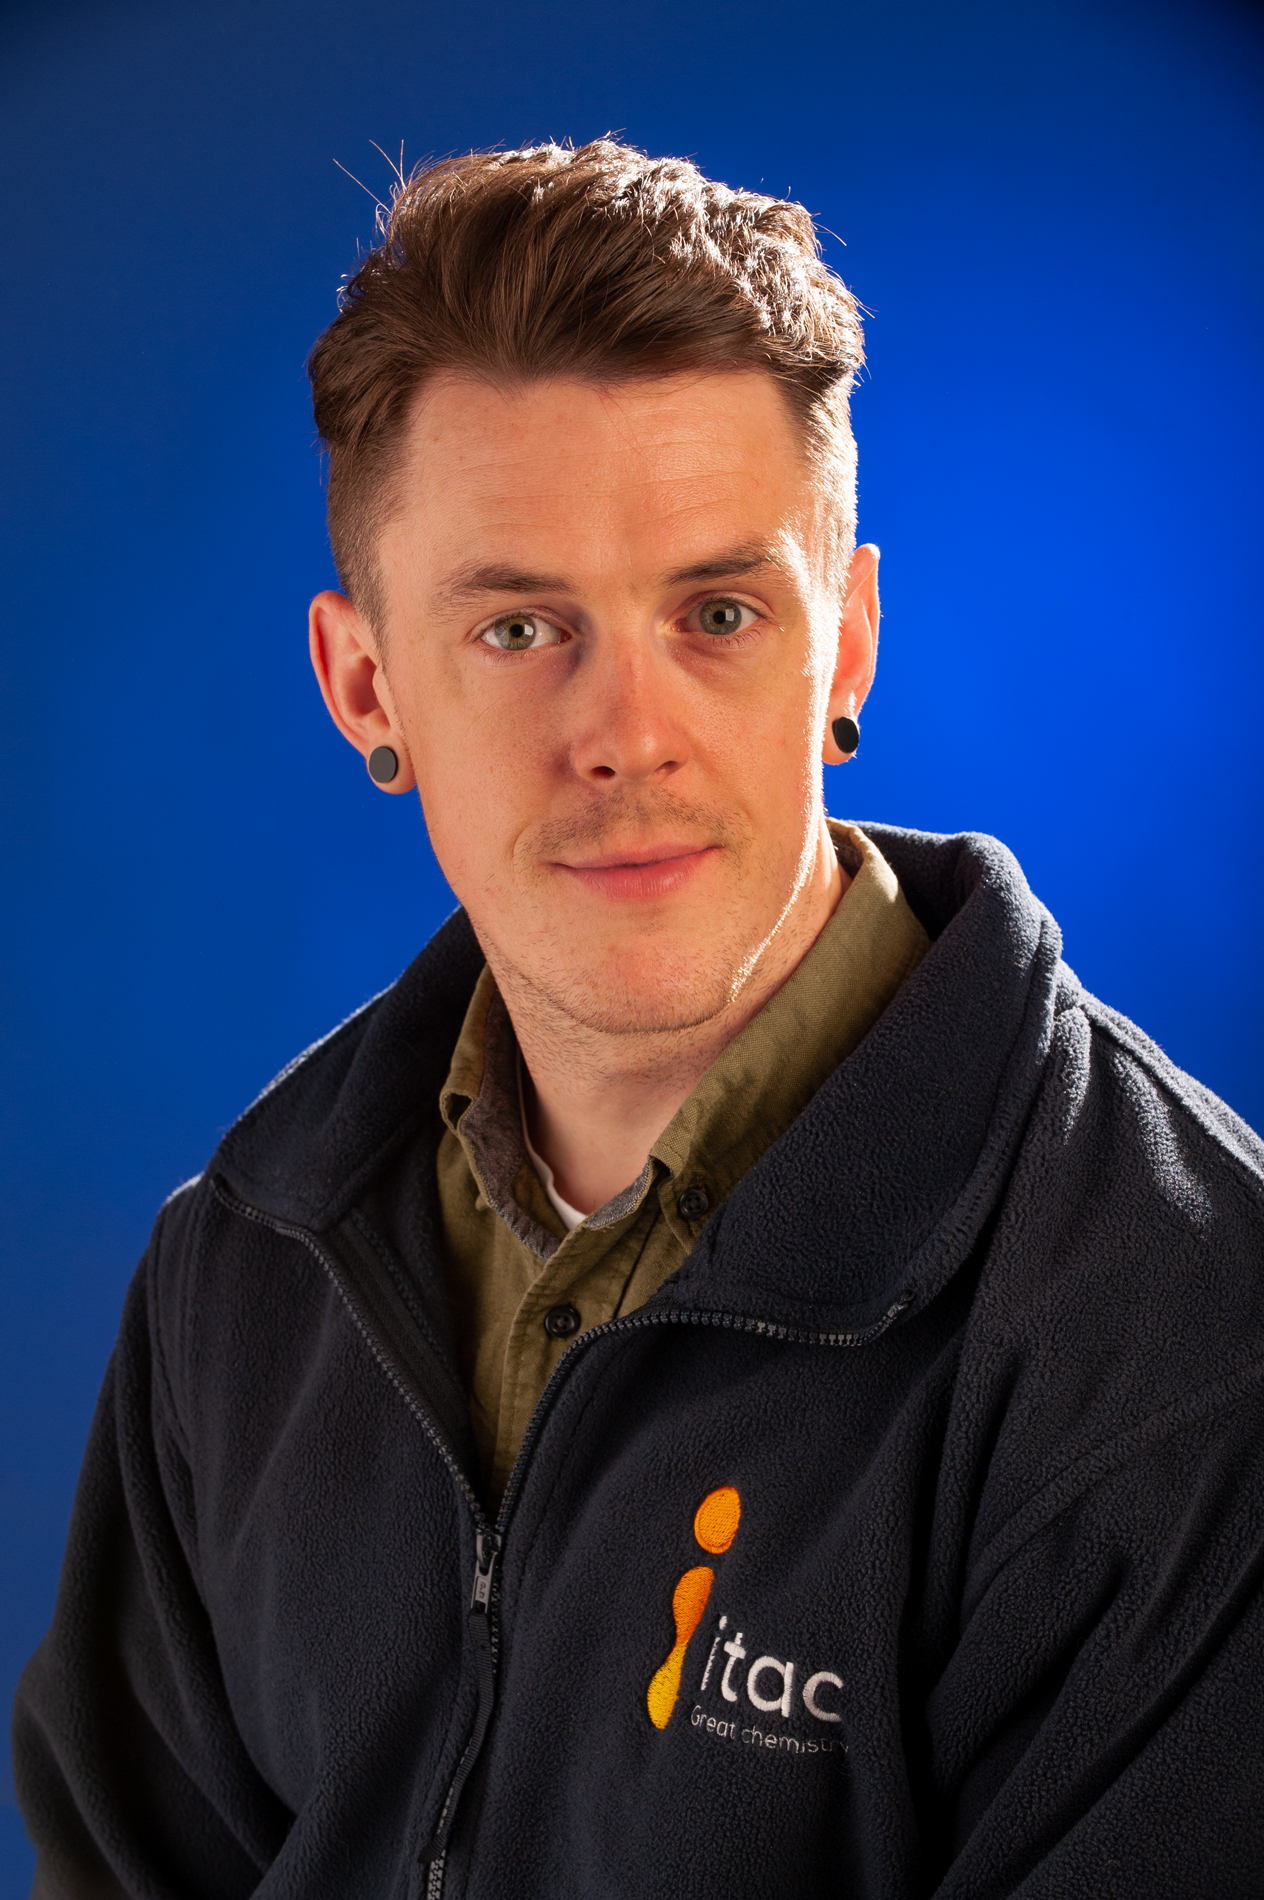 Profile image of male employee